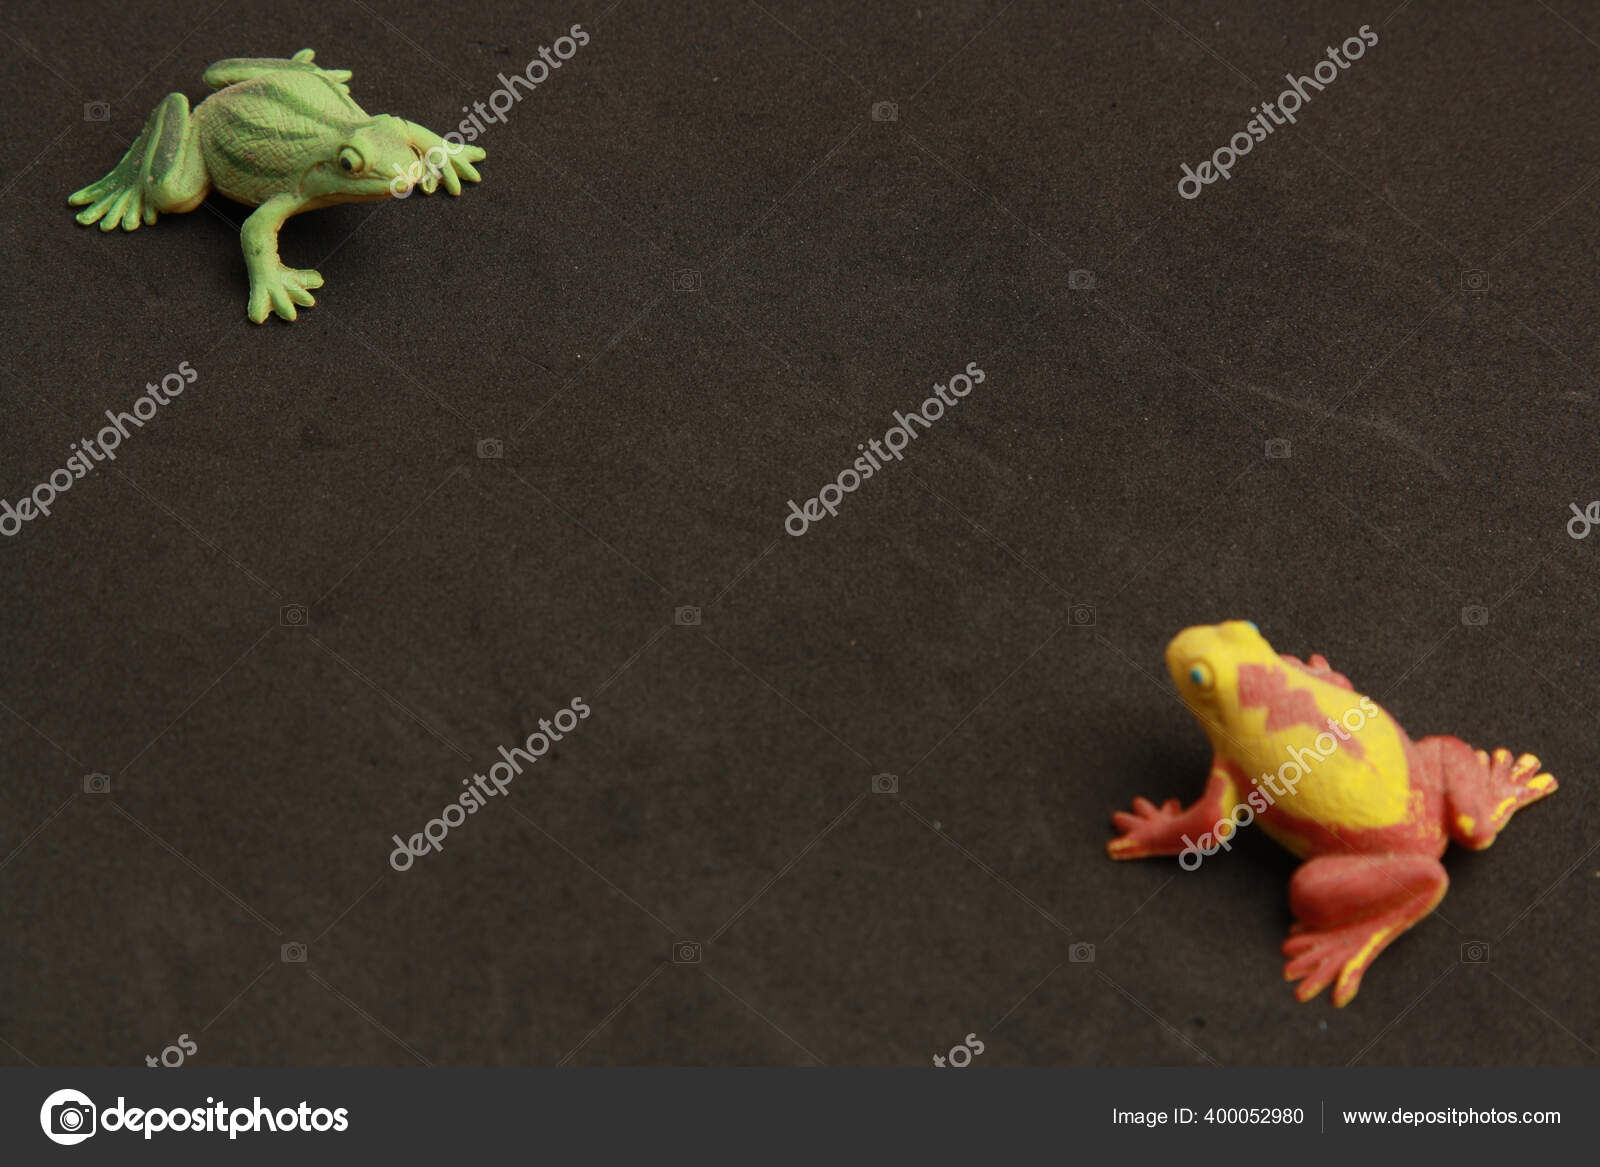 https://st4.depositphotos.com/27201292/40005/i/1600/depositphotos_400052980-stock-photo-group-rubber-toy-frogs-yellow.jpg